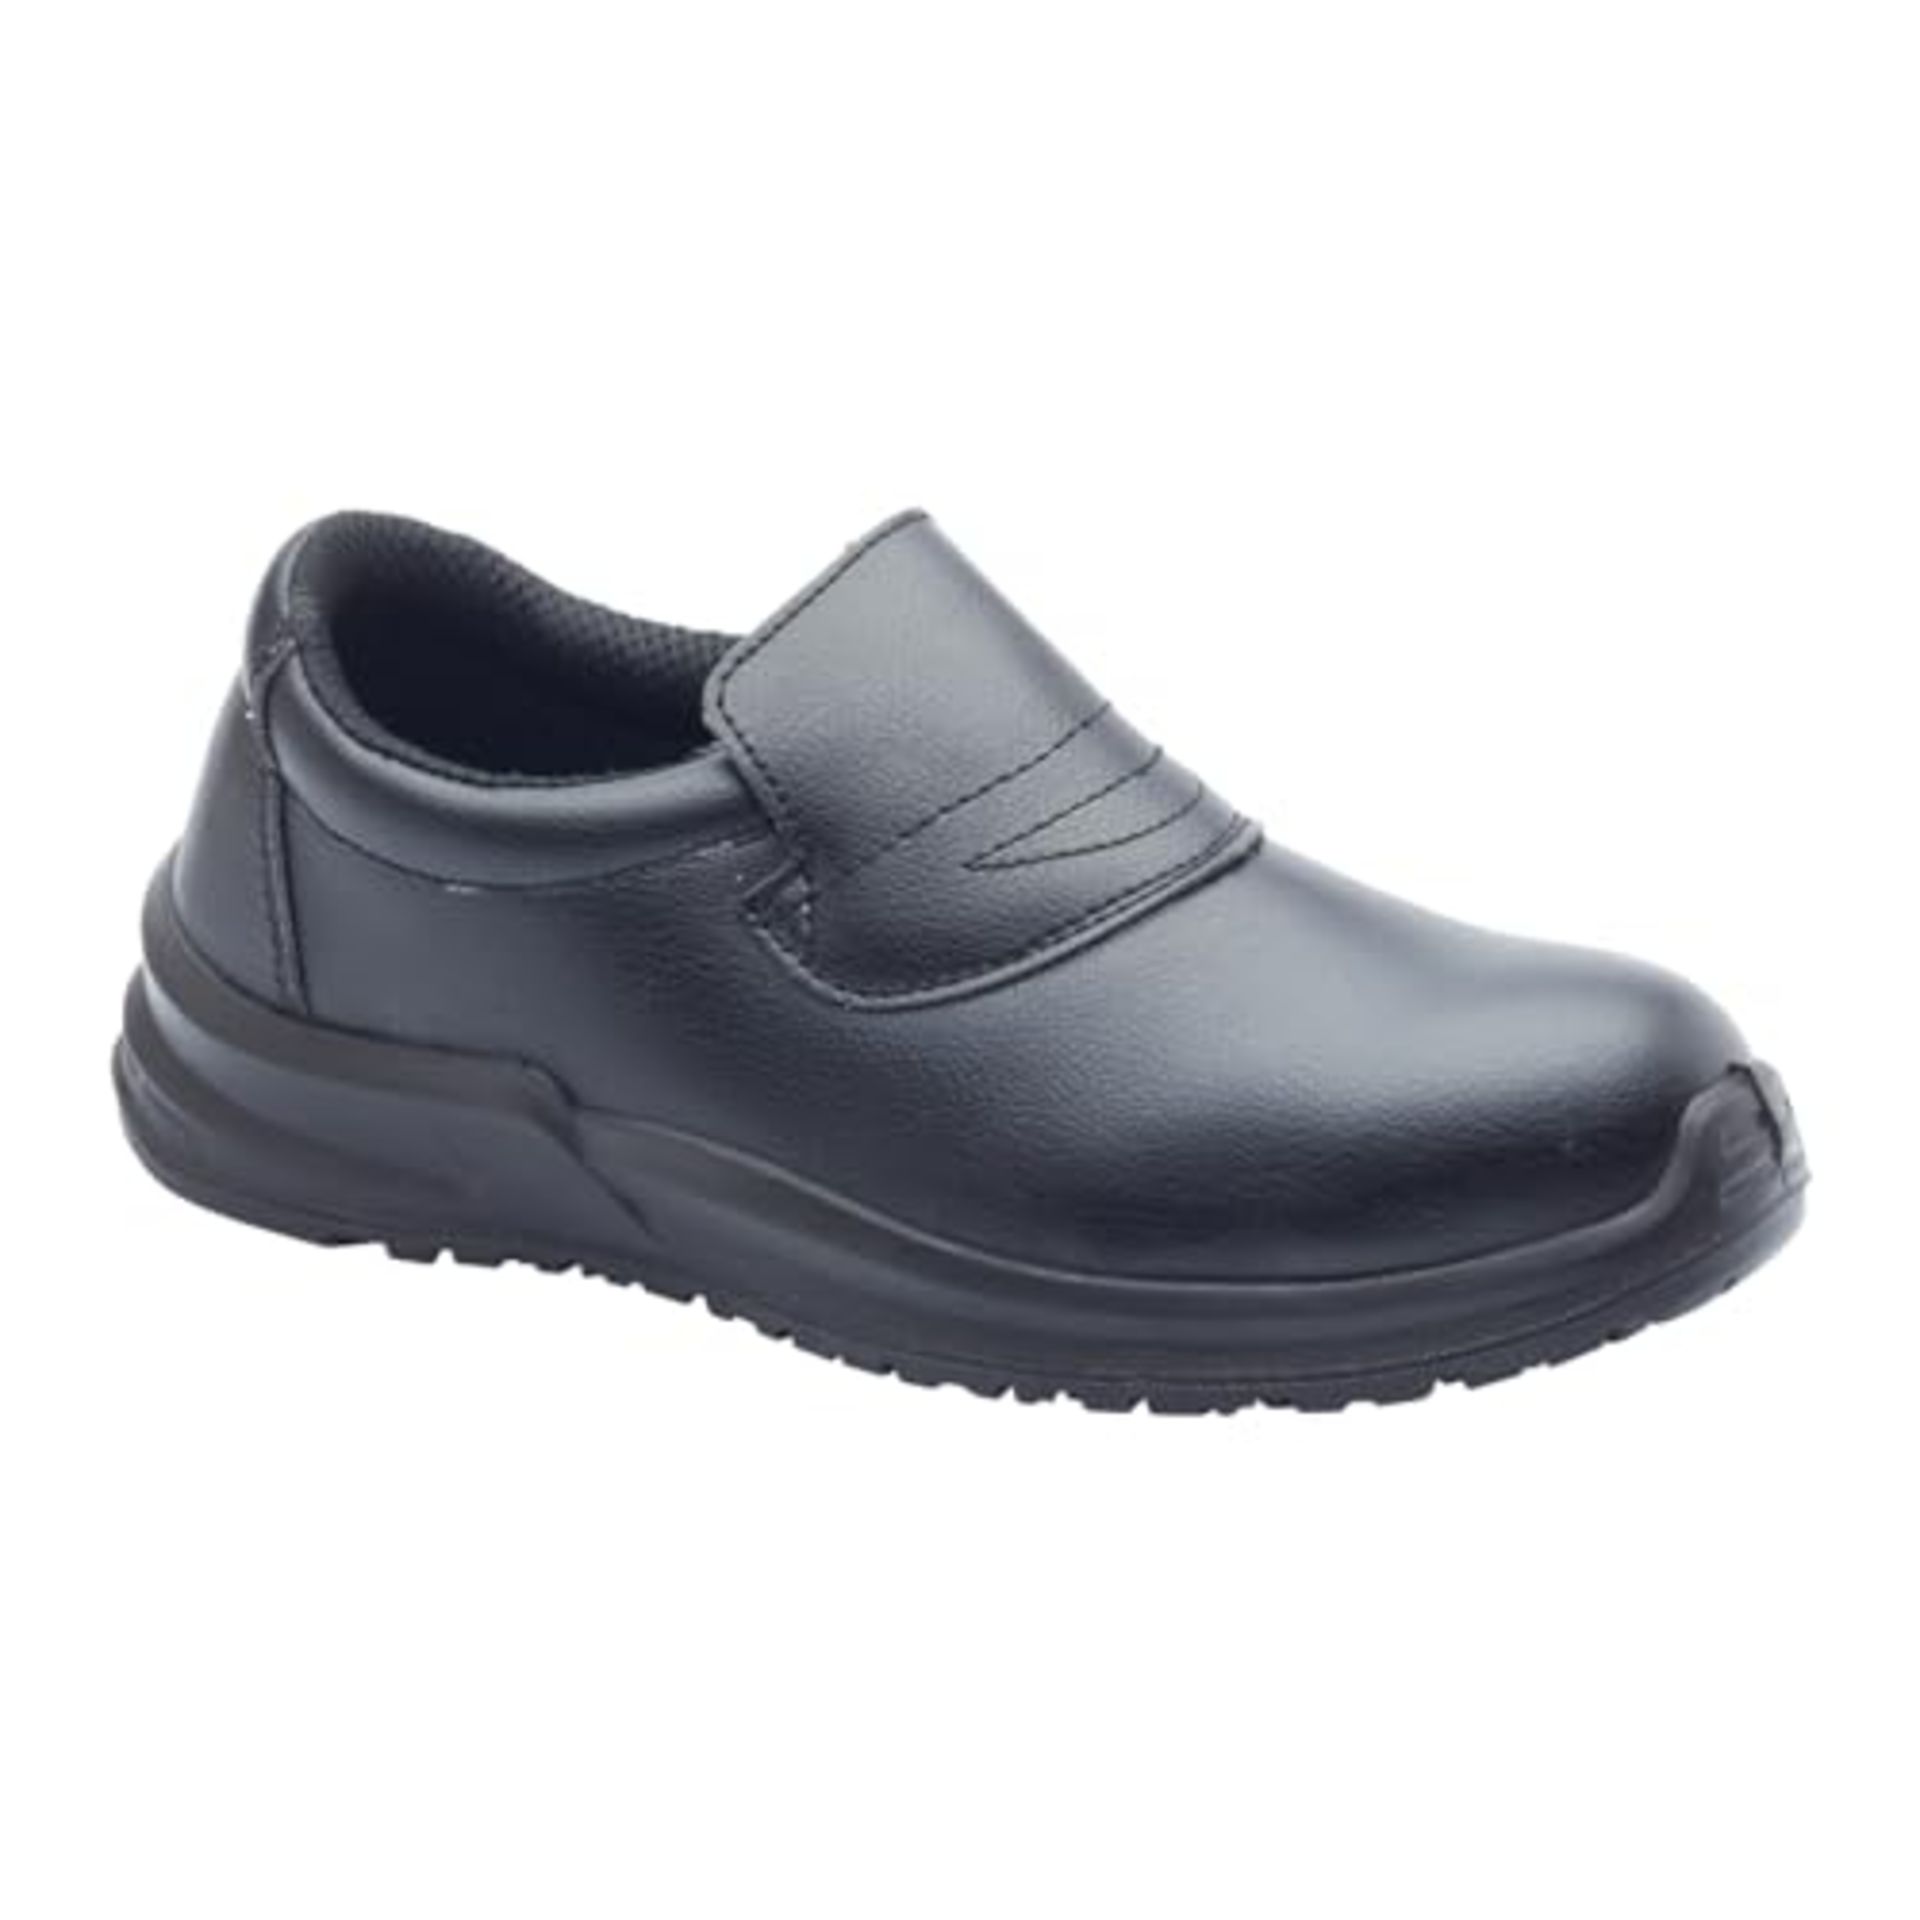 Blackrock Black Hygiene Slip-On Safety Shoe Steel Toe Cap Shoes Non Slip Shoes, Nursin